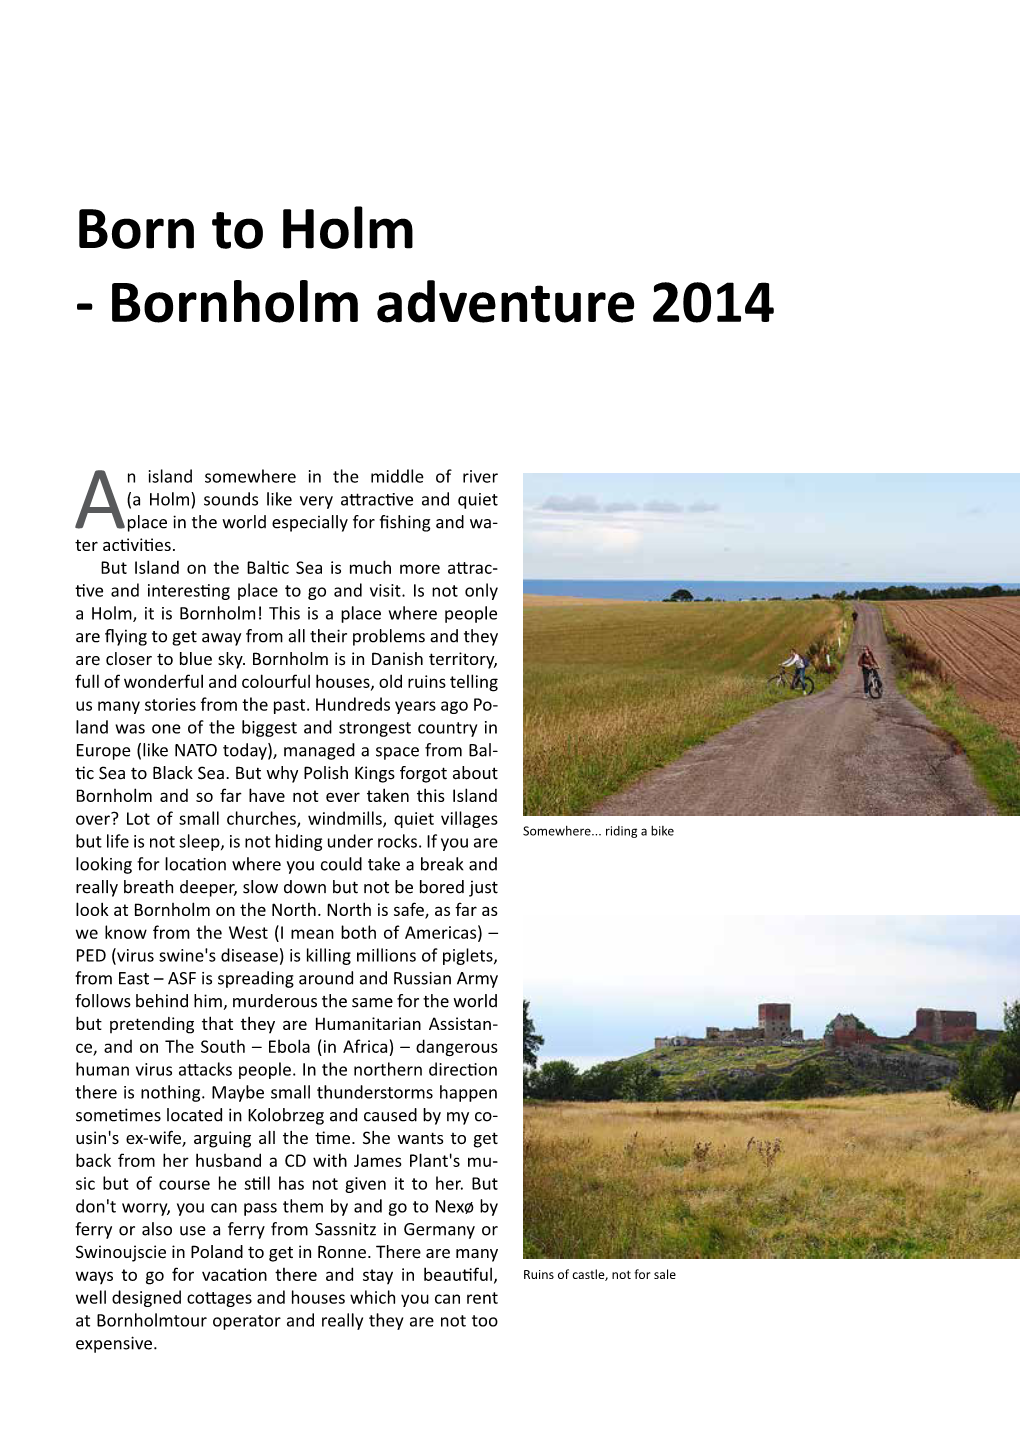 Born to Holm - Bornholm Adventure 2014